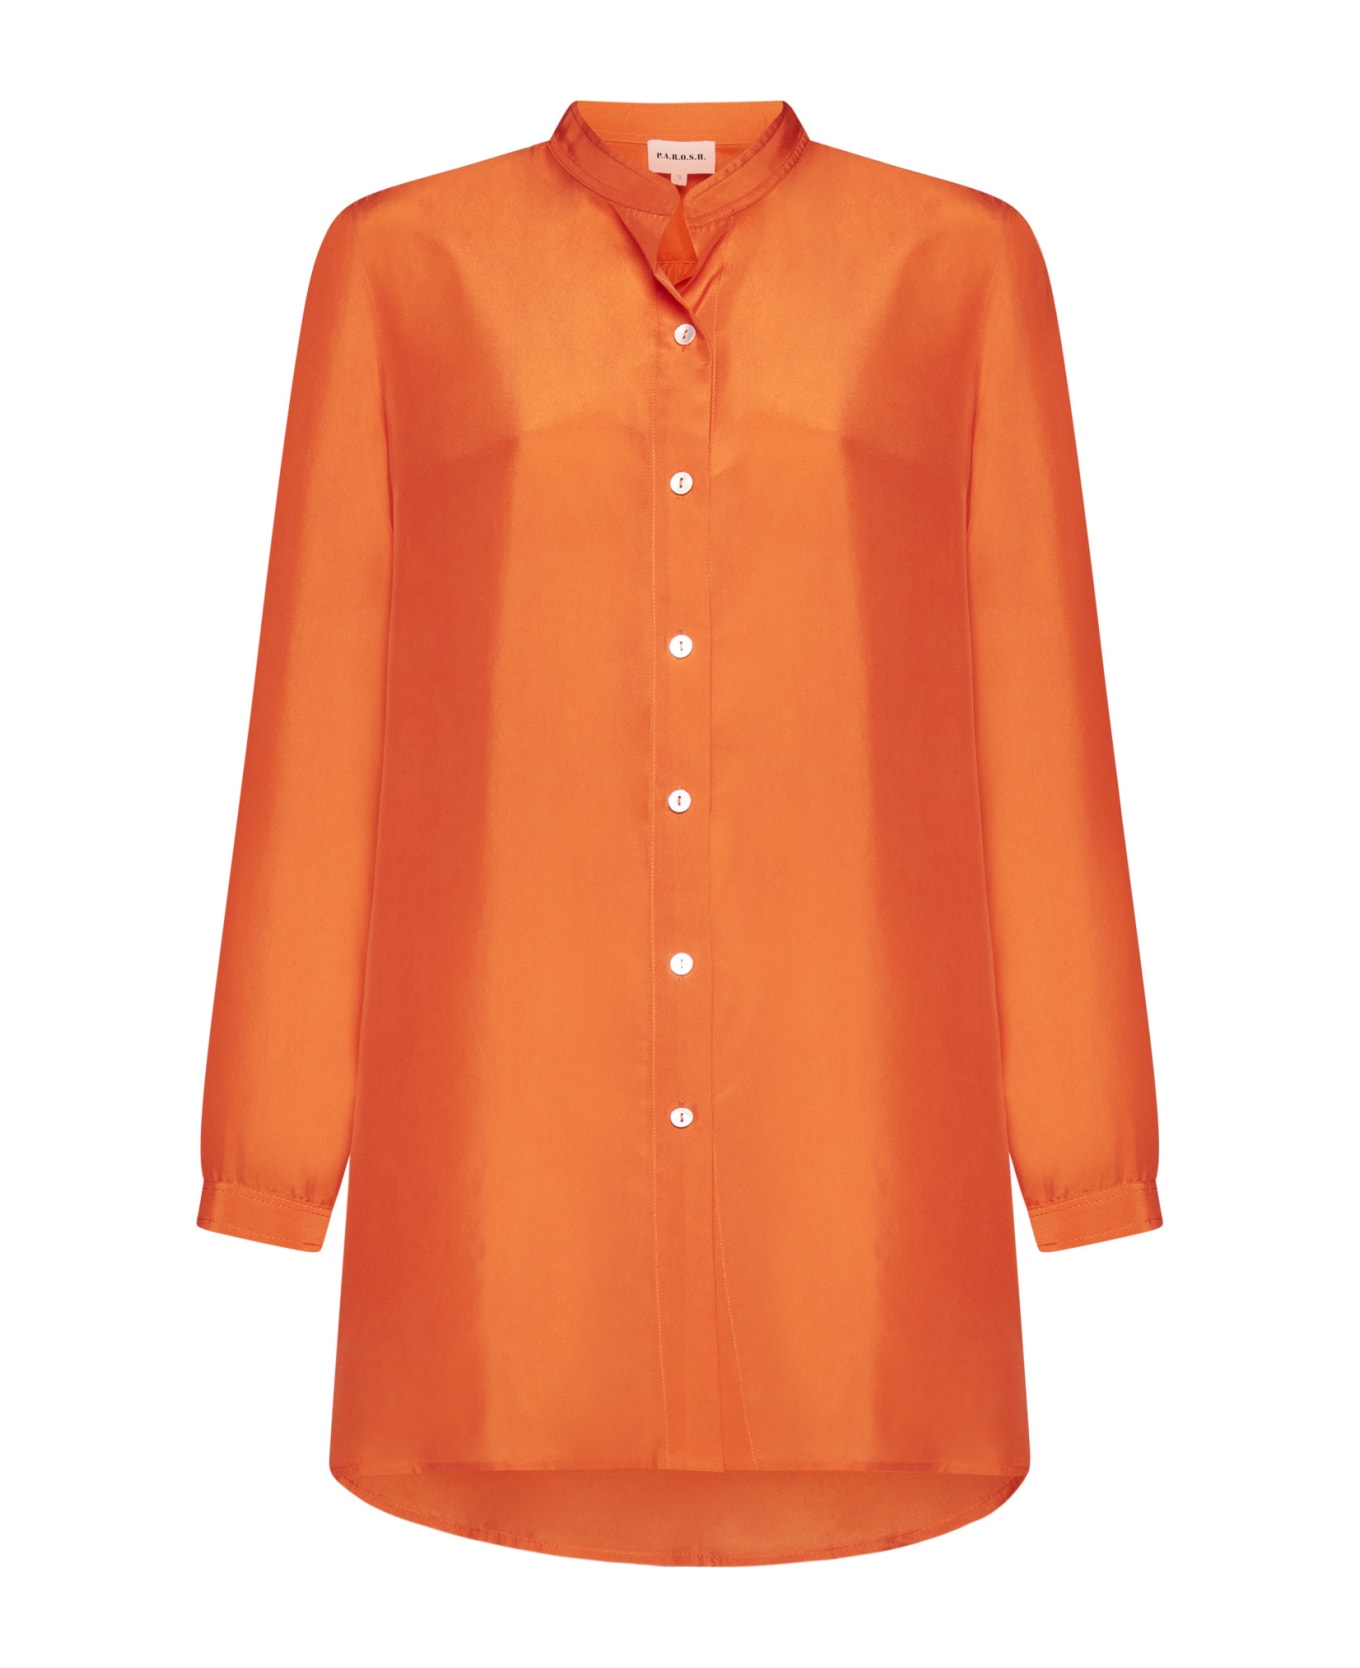 Parosh Dress - Arancio